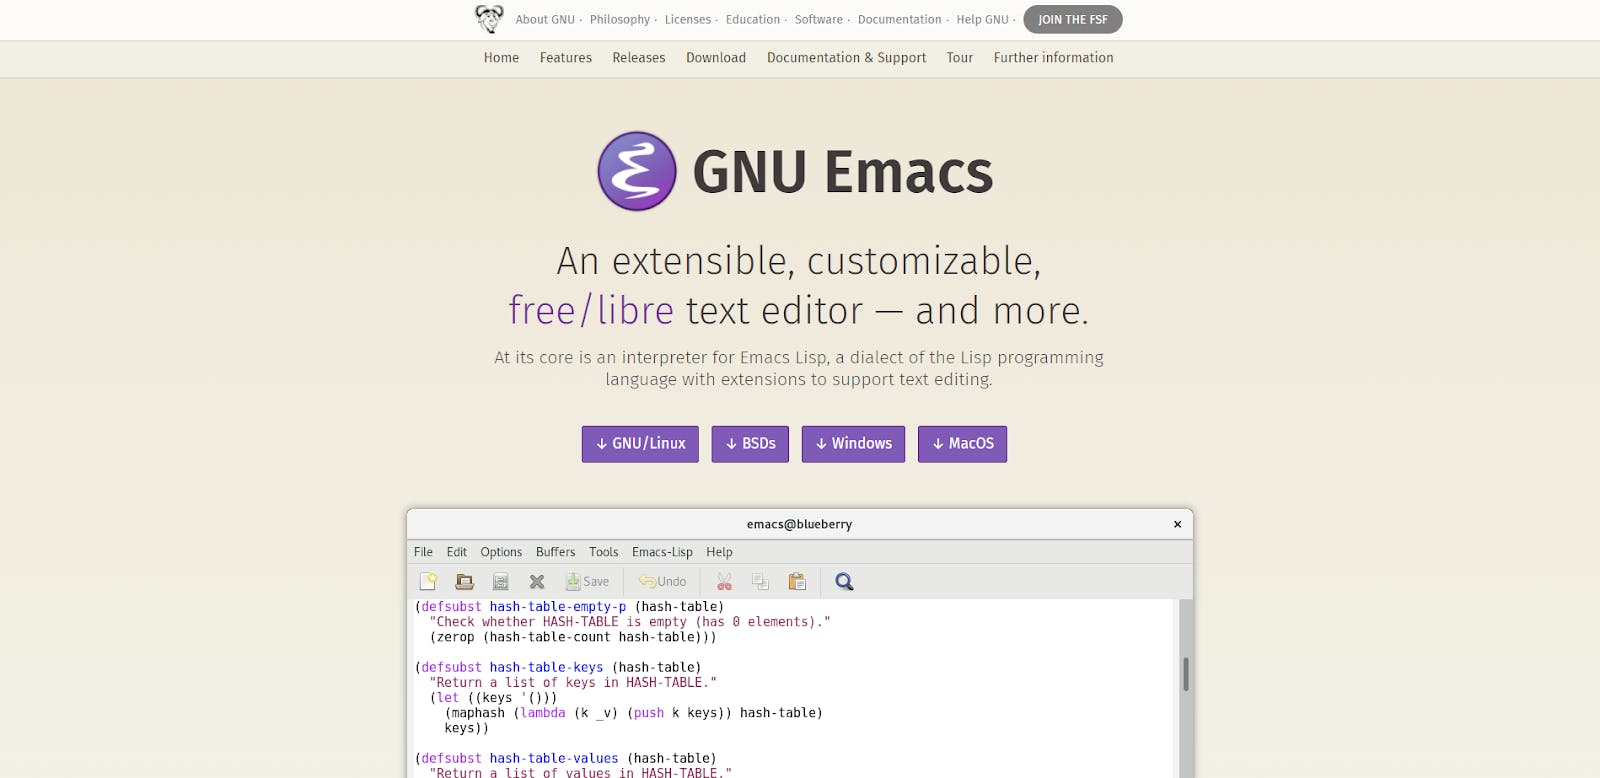 gnu emacs landing page